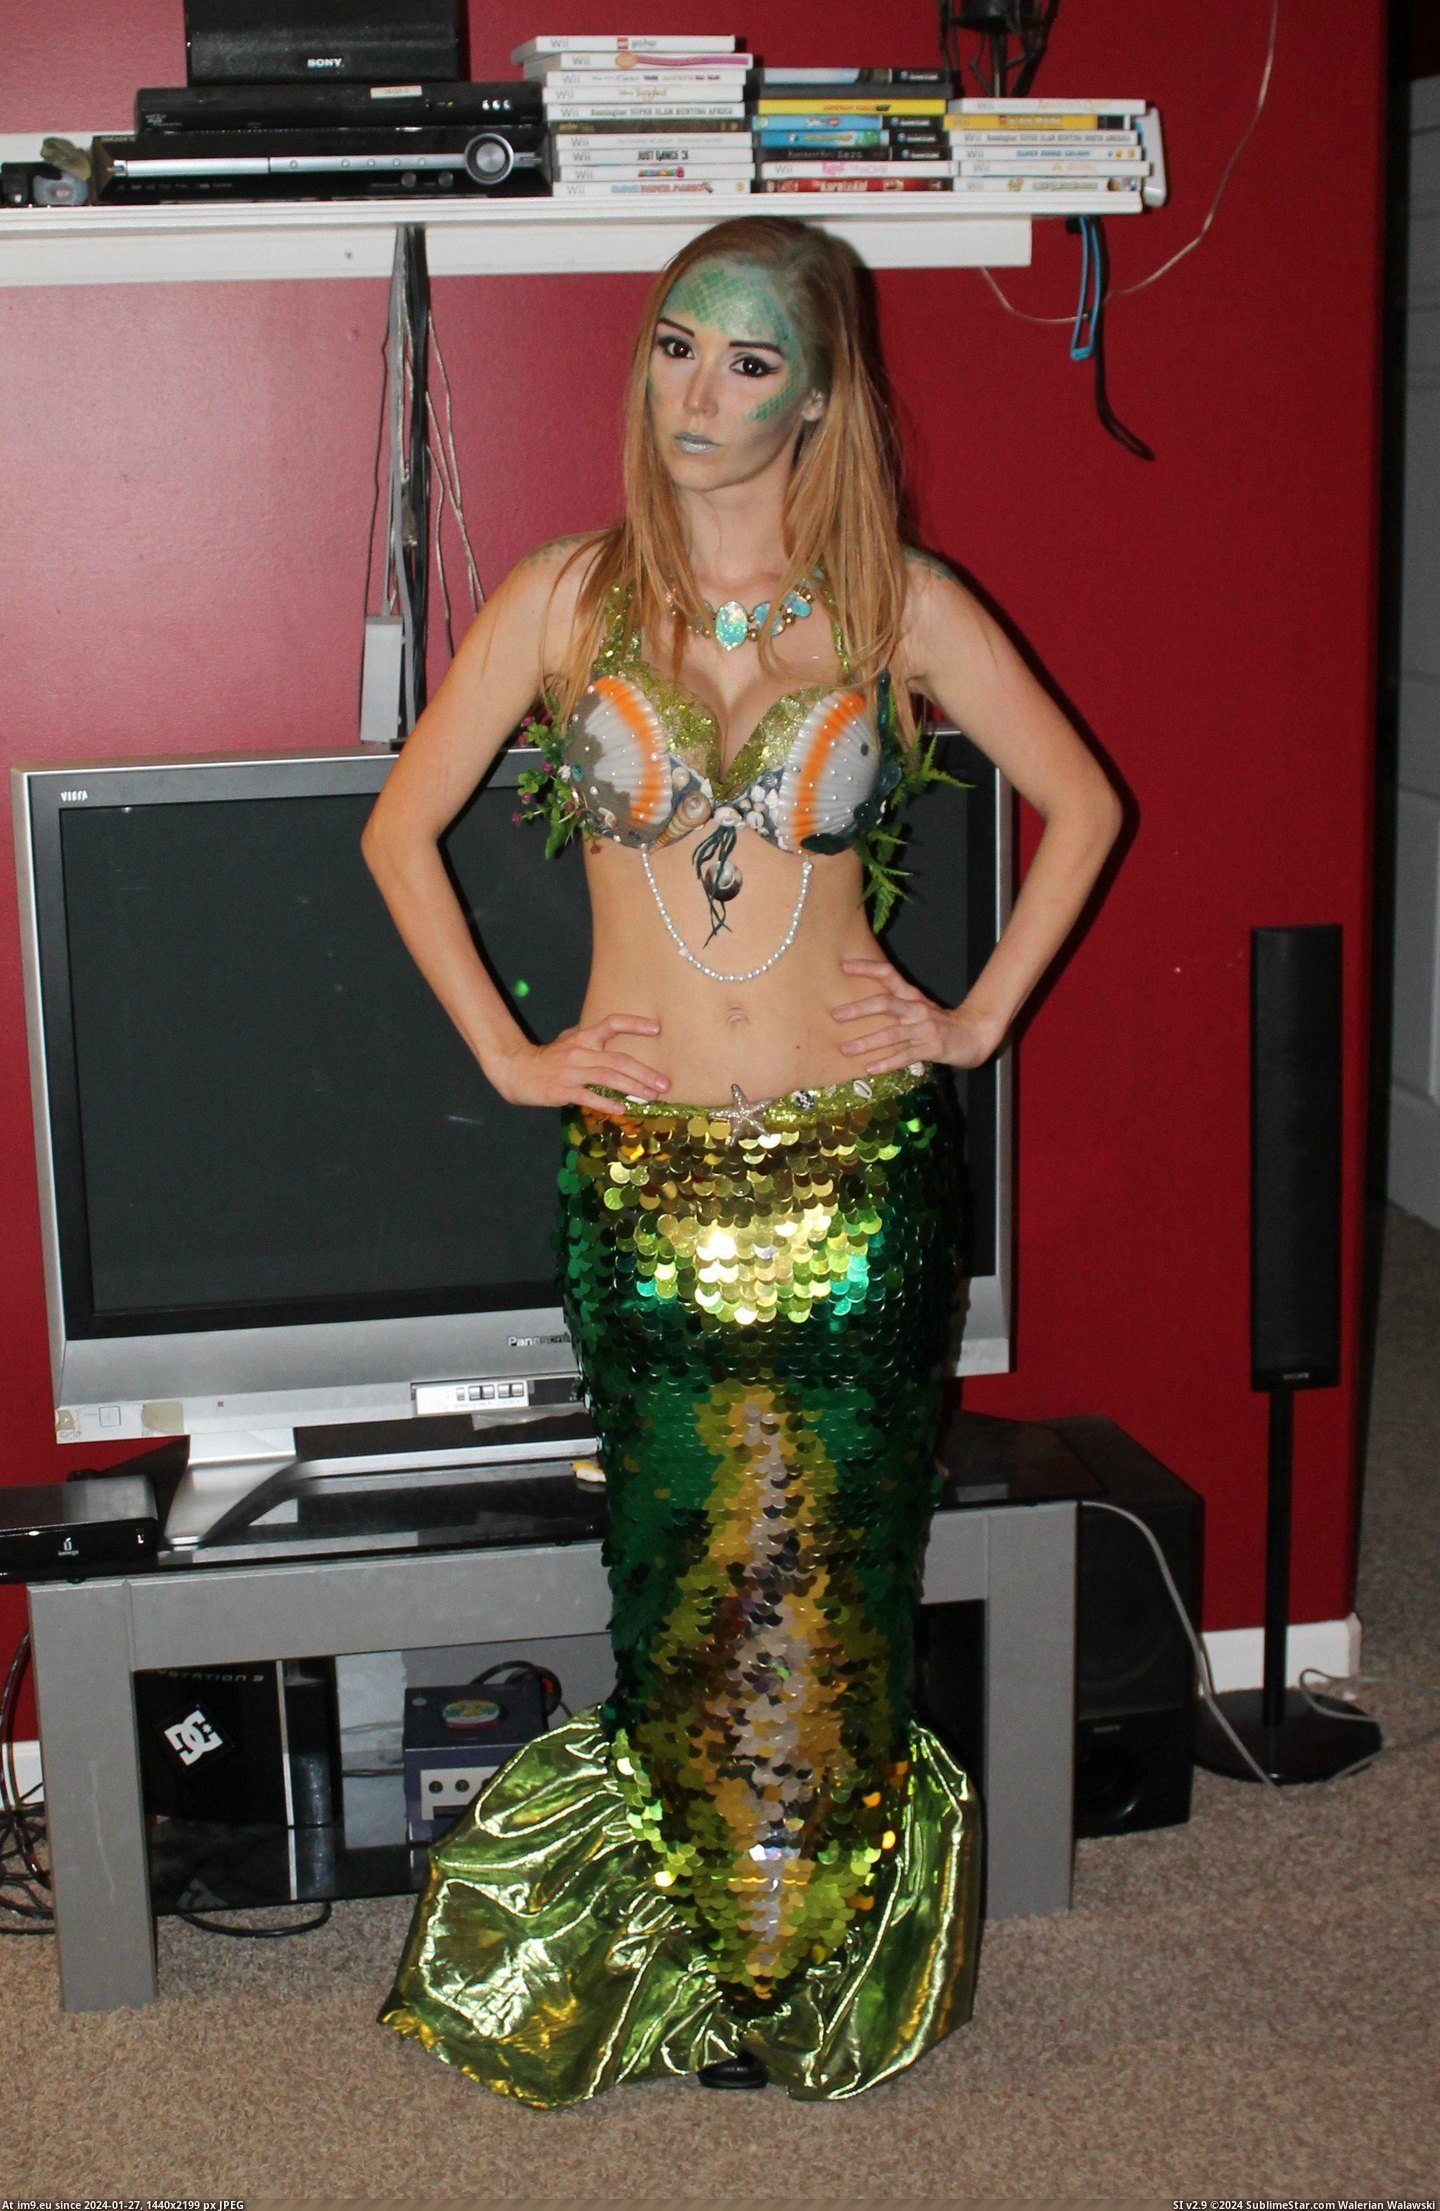 #Costume #Homemade #Mermaid [Pics] My homemade mermaid costume! 3 Pic. (Изображение из альбом My r/PICS favs))